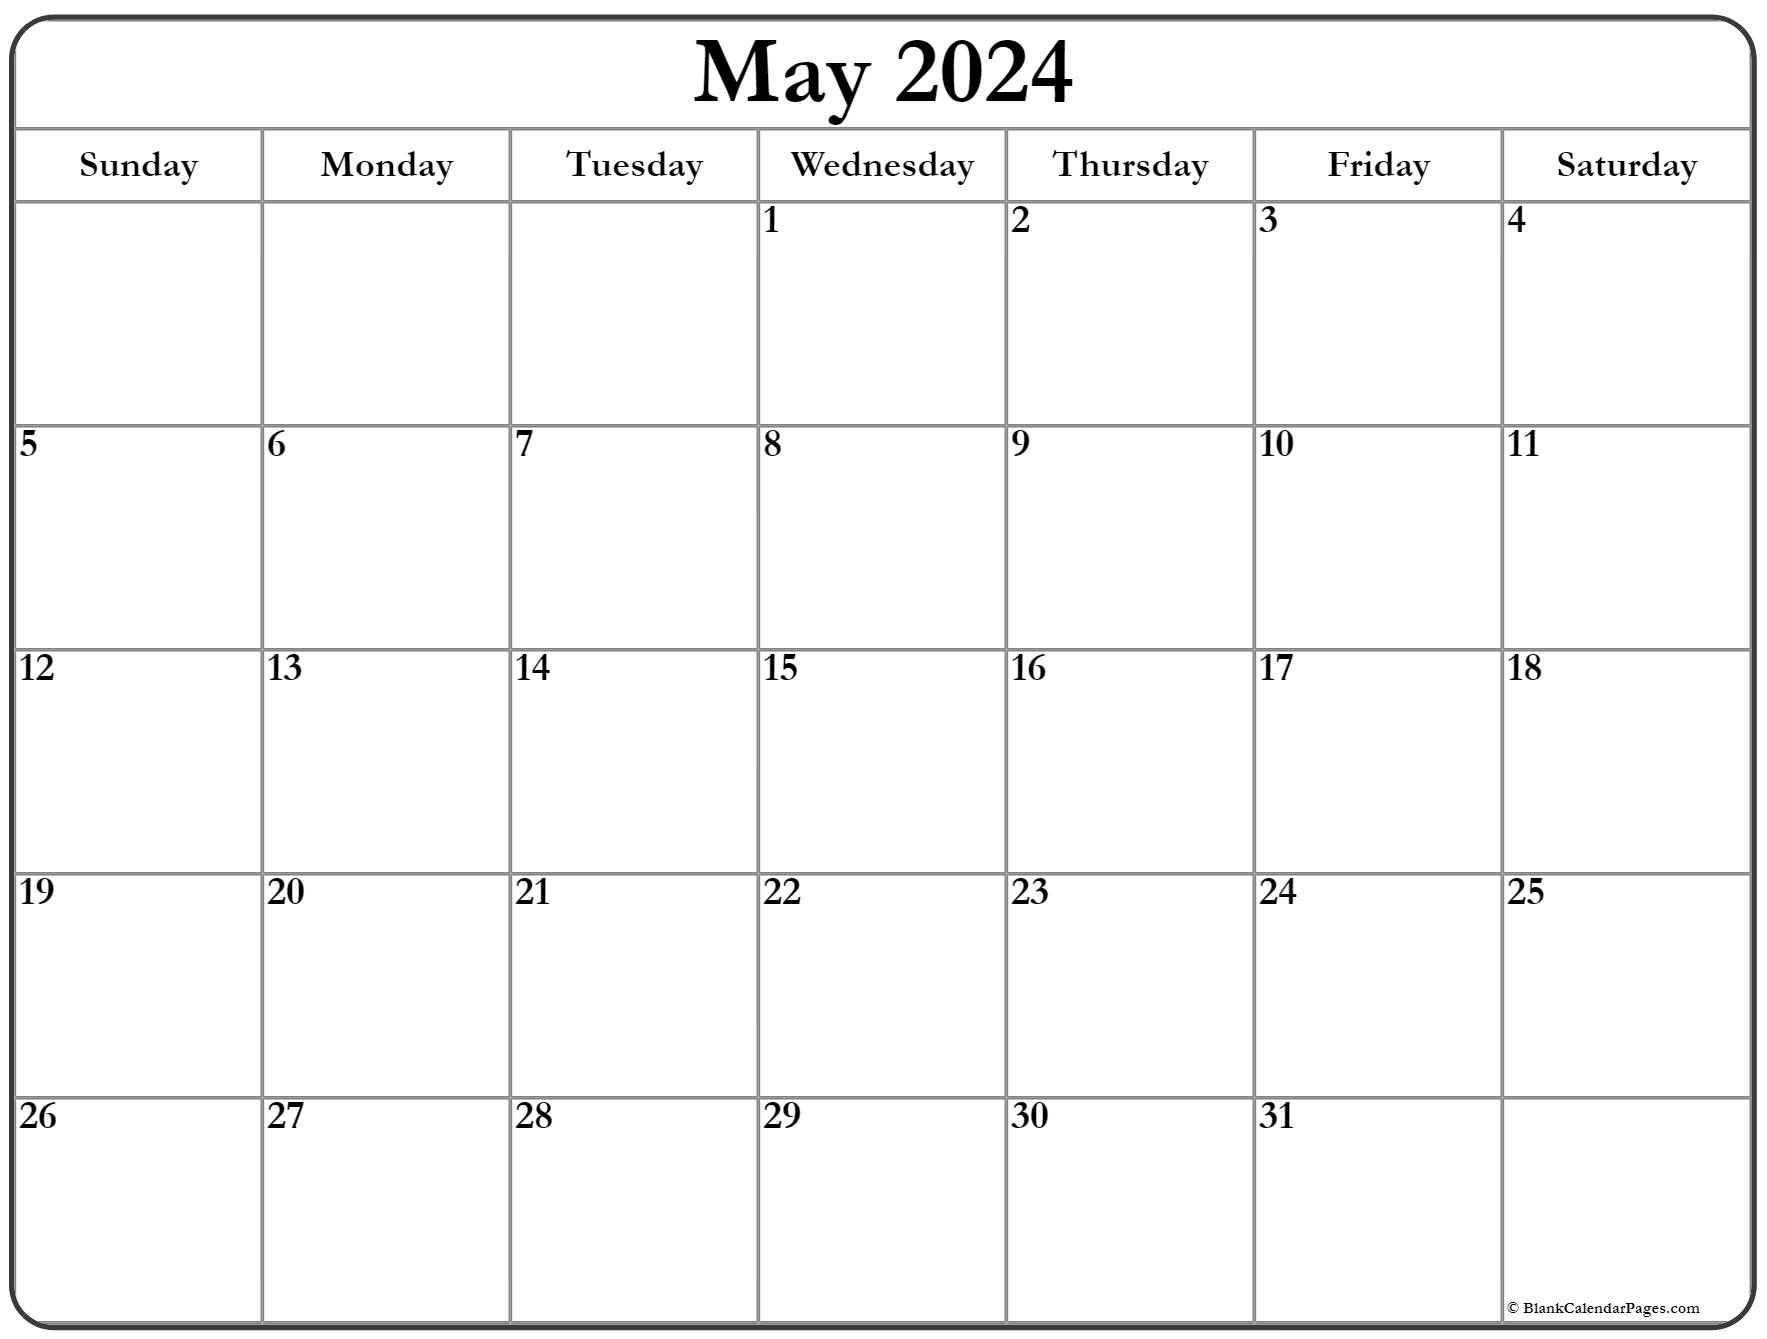 May 2022 Calendar Printable May 2022 Calendar | Free Printable Calendar Templates